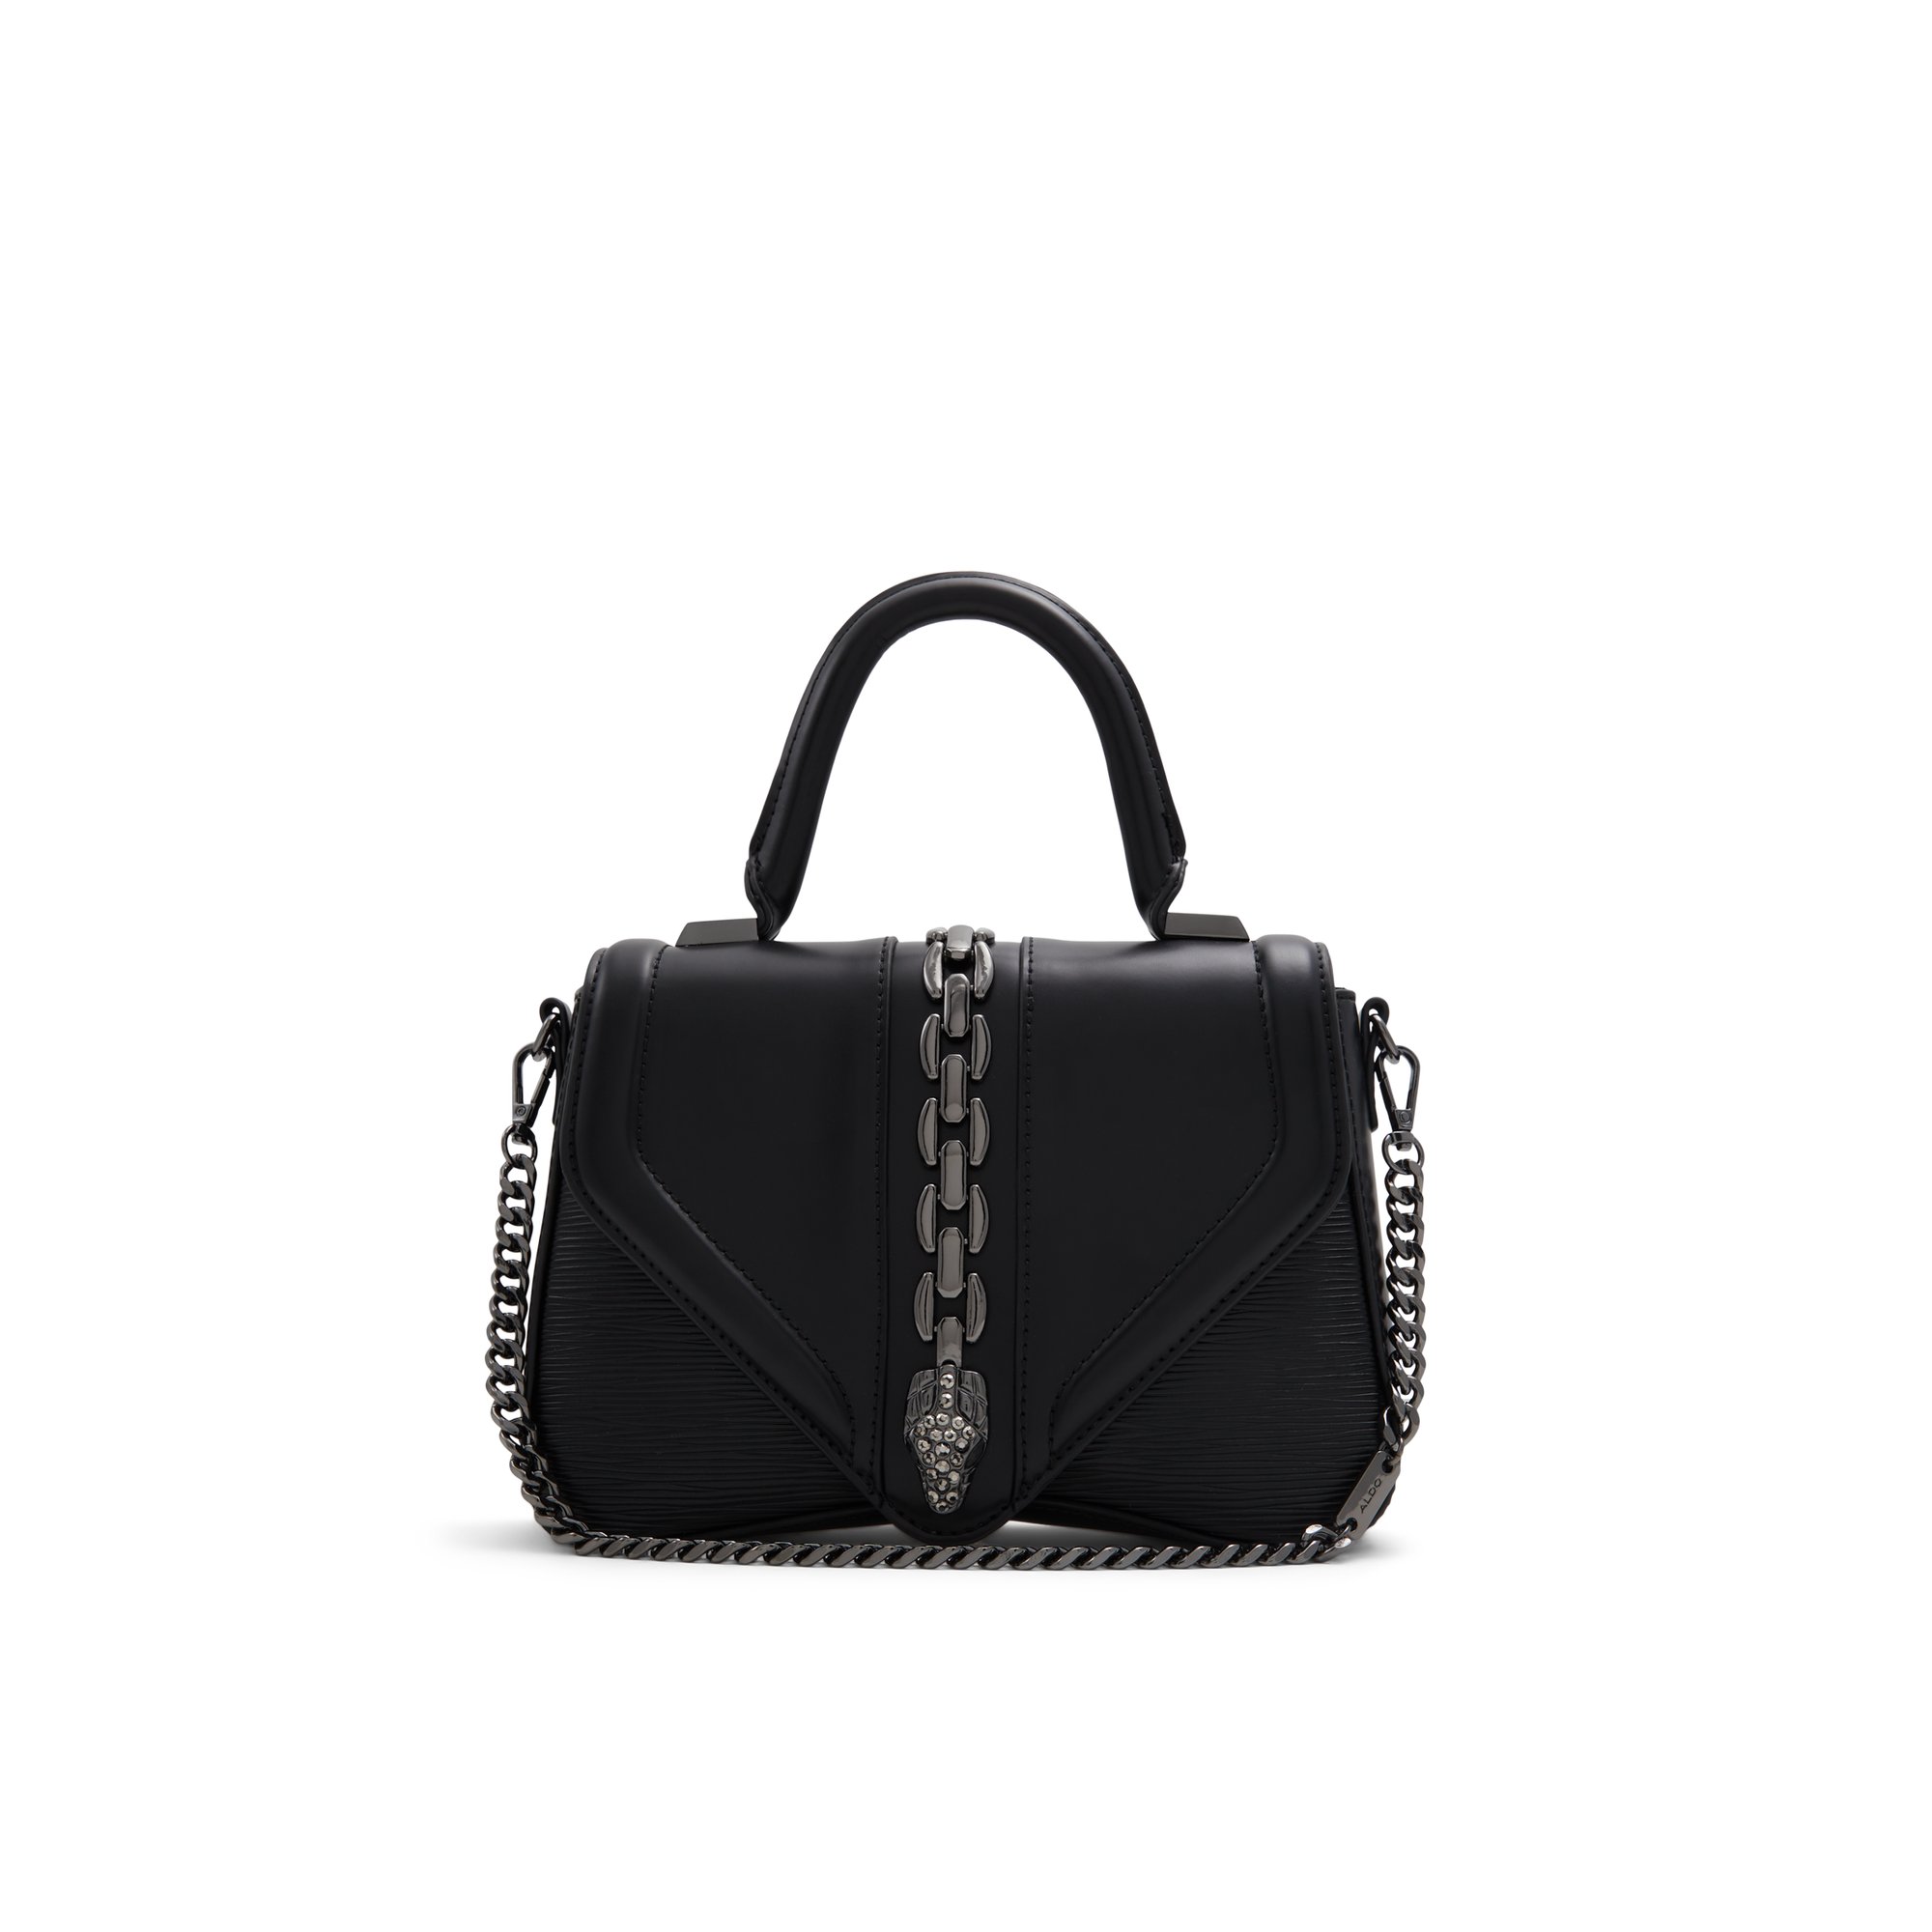 ALDO Stefanyx - Women's Top Handle Handbag - Black